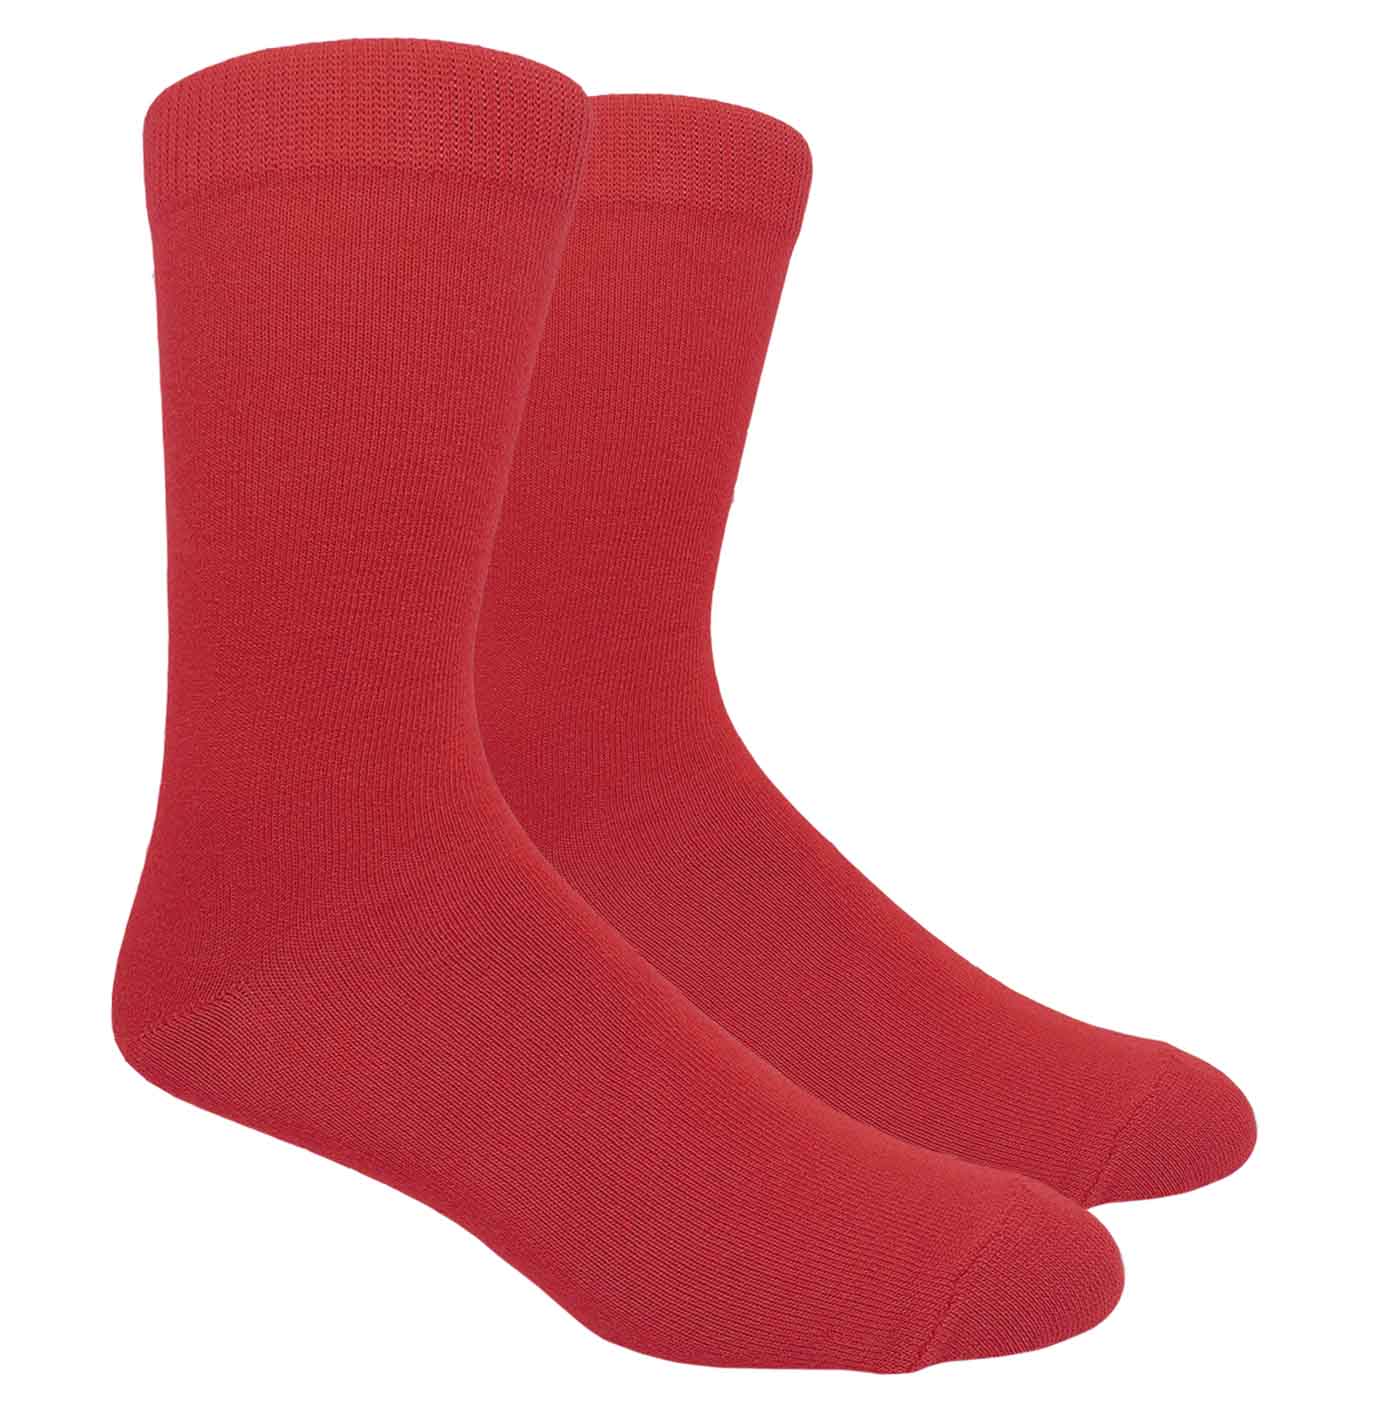 Black Label Plain Dress Socks - Red